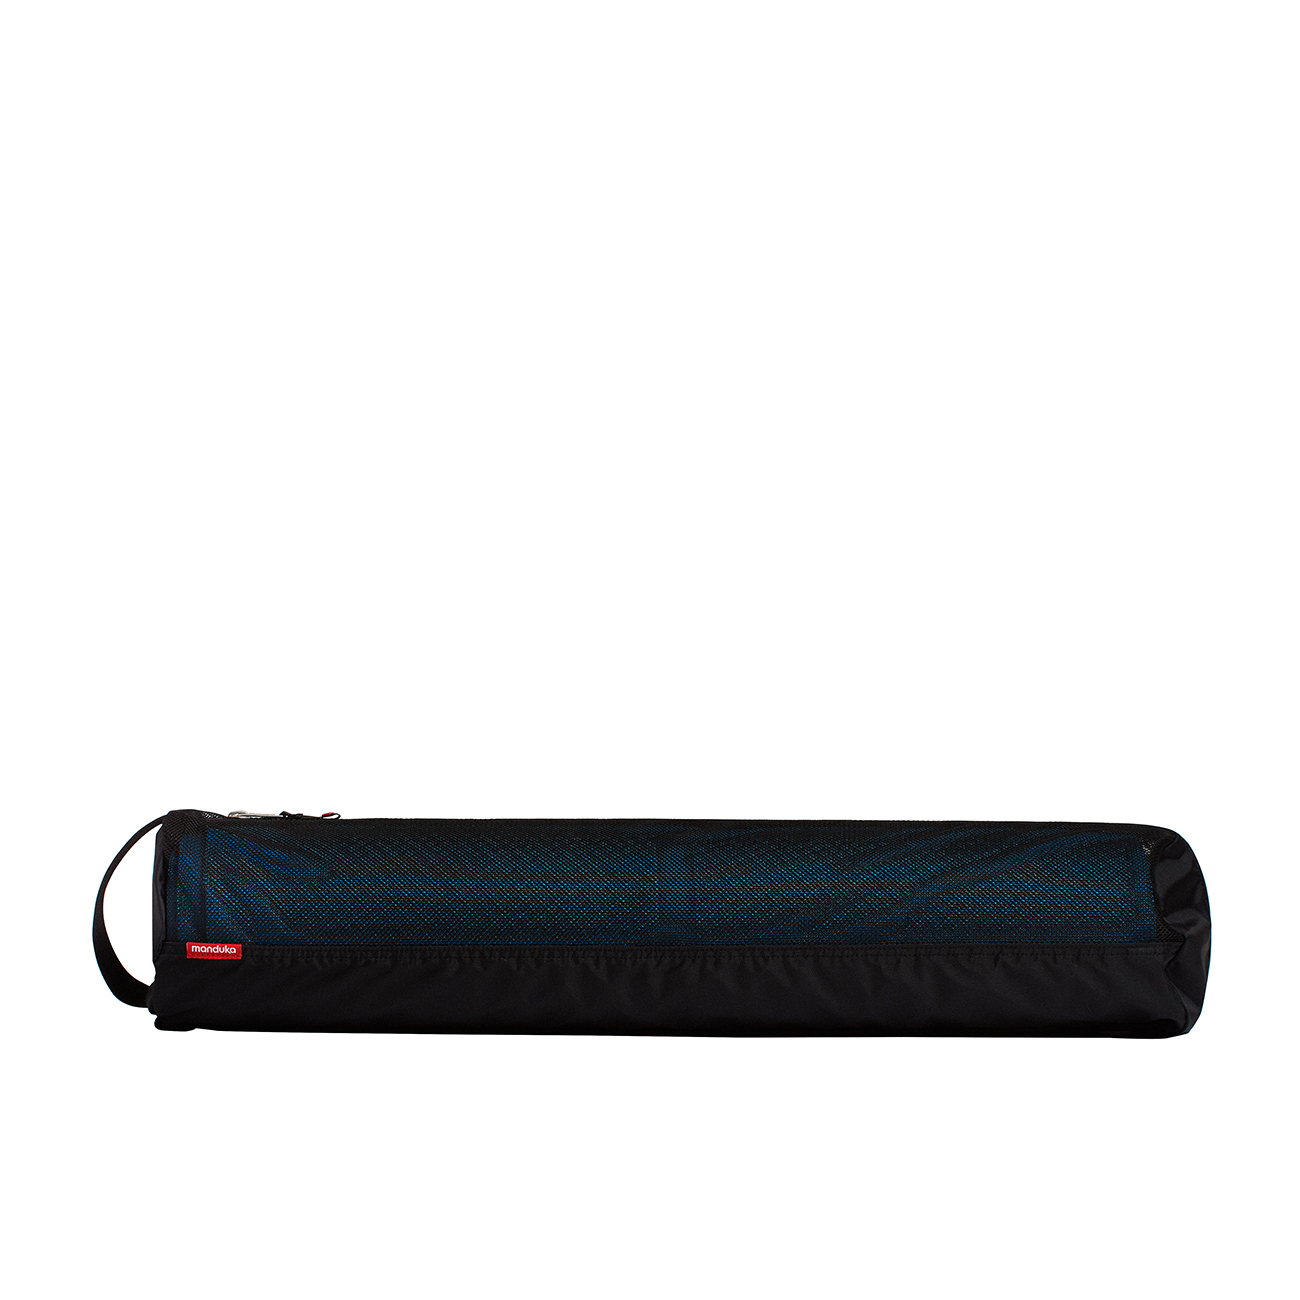 Yoga Bag Breathe Easy - Black, Bags for your yoga mat, Yoga Mat Bags, Yoga, EQUIPMENT & ACCESSORIES